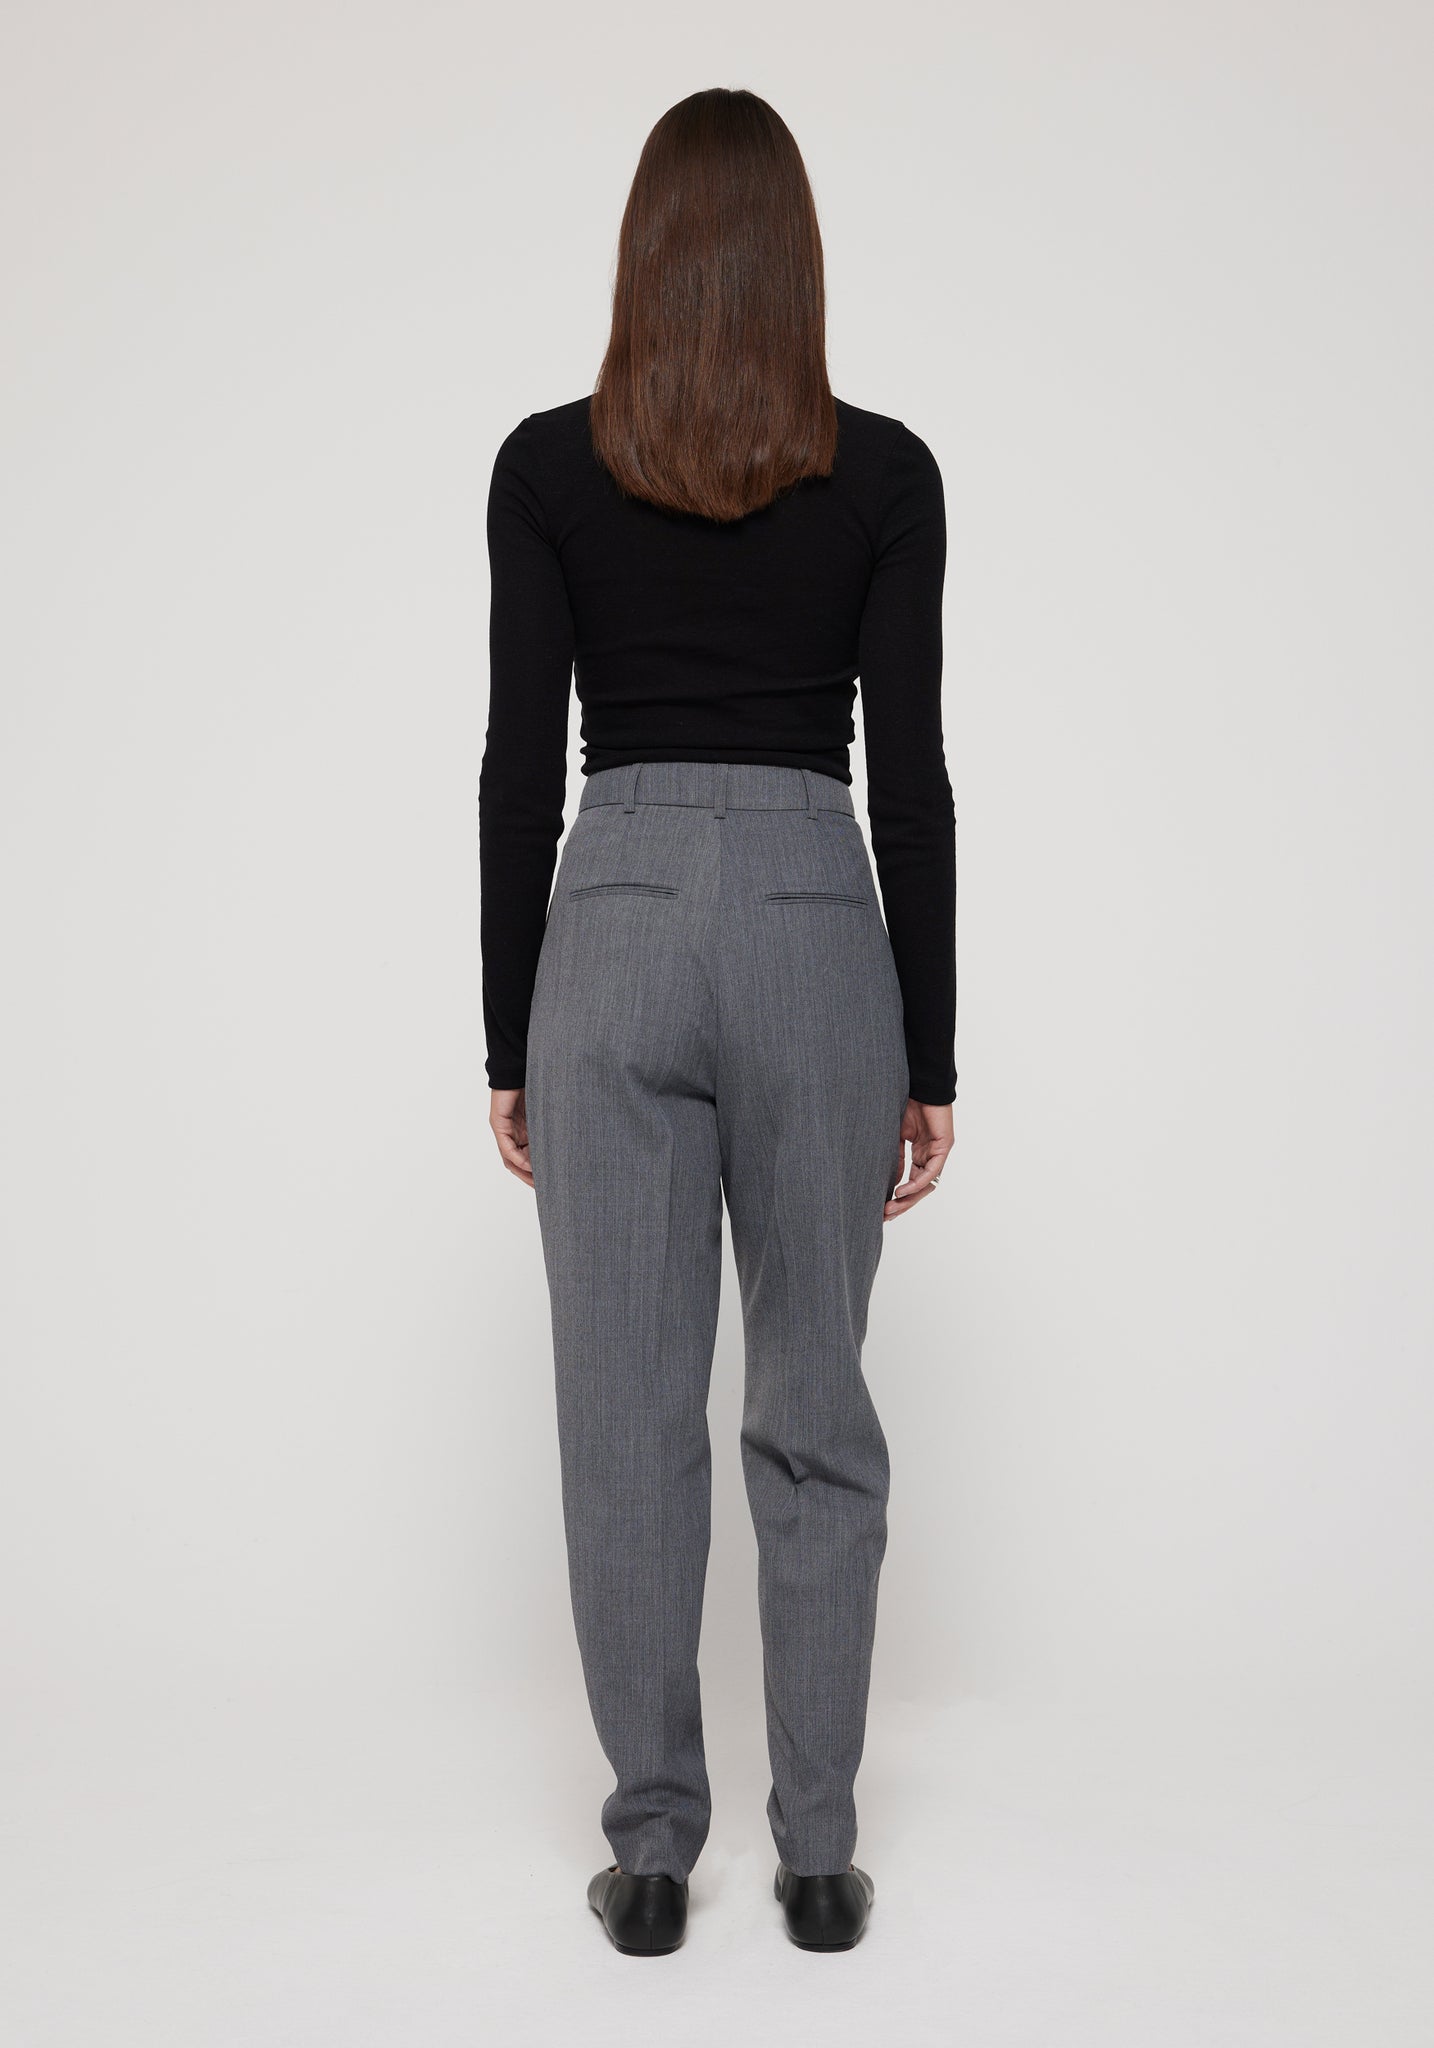 Róhe Carrot fit single pleat trousers grey melange back